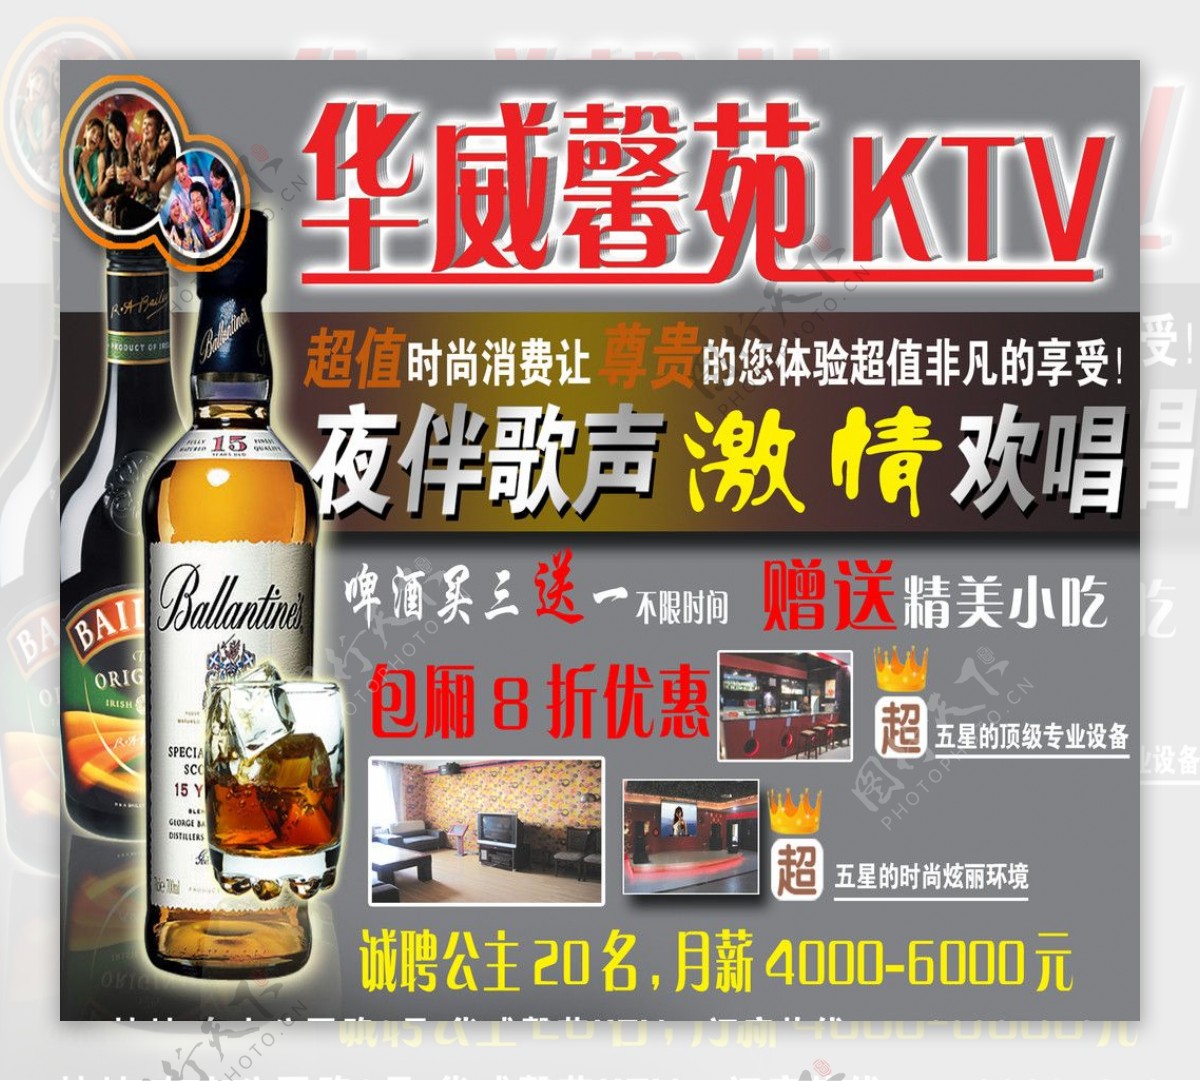 KTV宣传促销图片